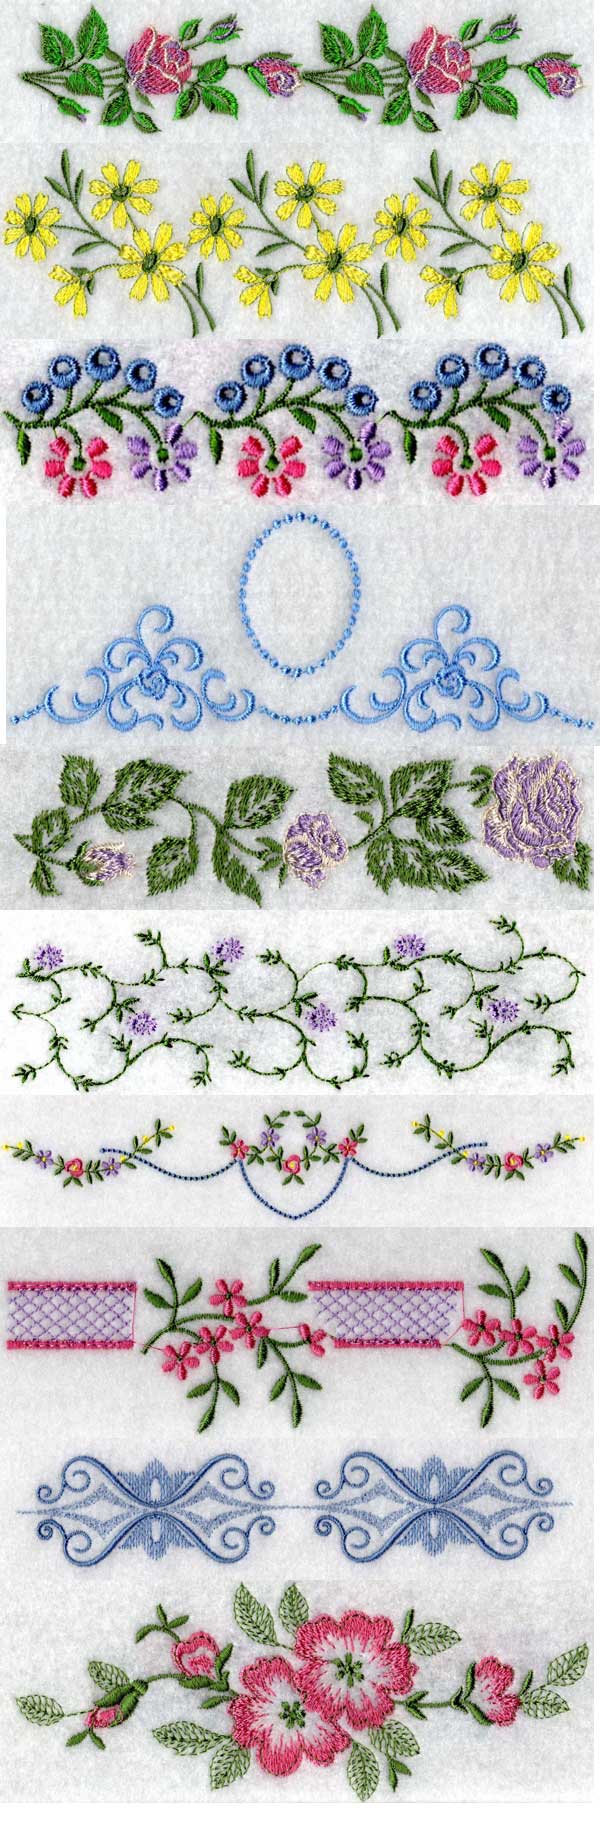 Linens 3 Embroidery Machine Design Details